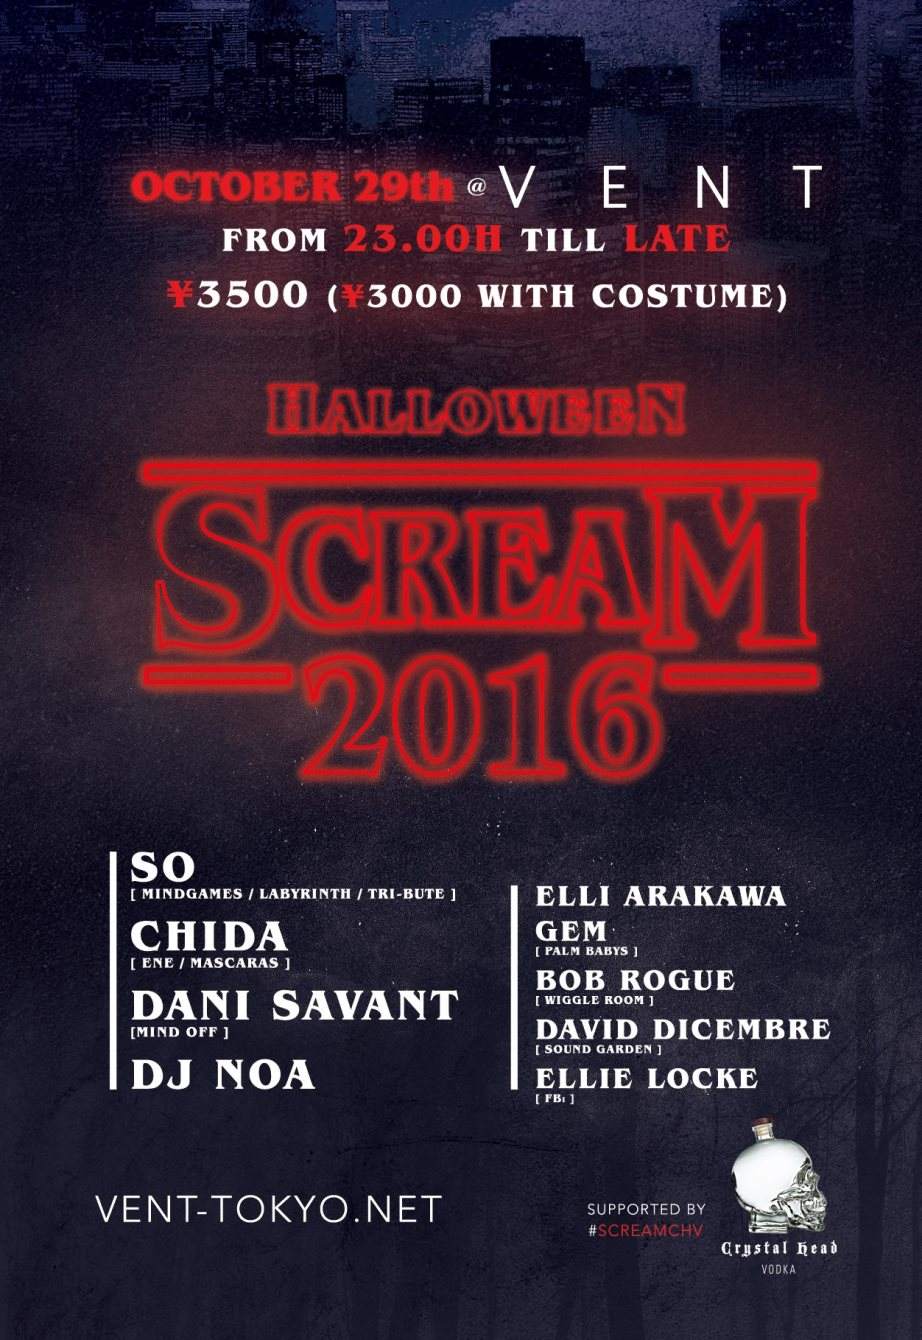 Scream 2016 - フライヤー表